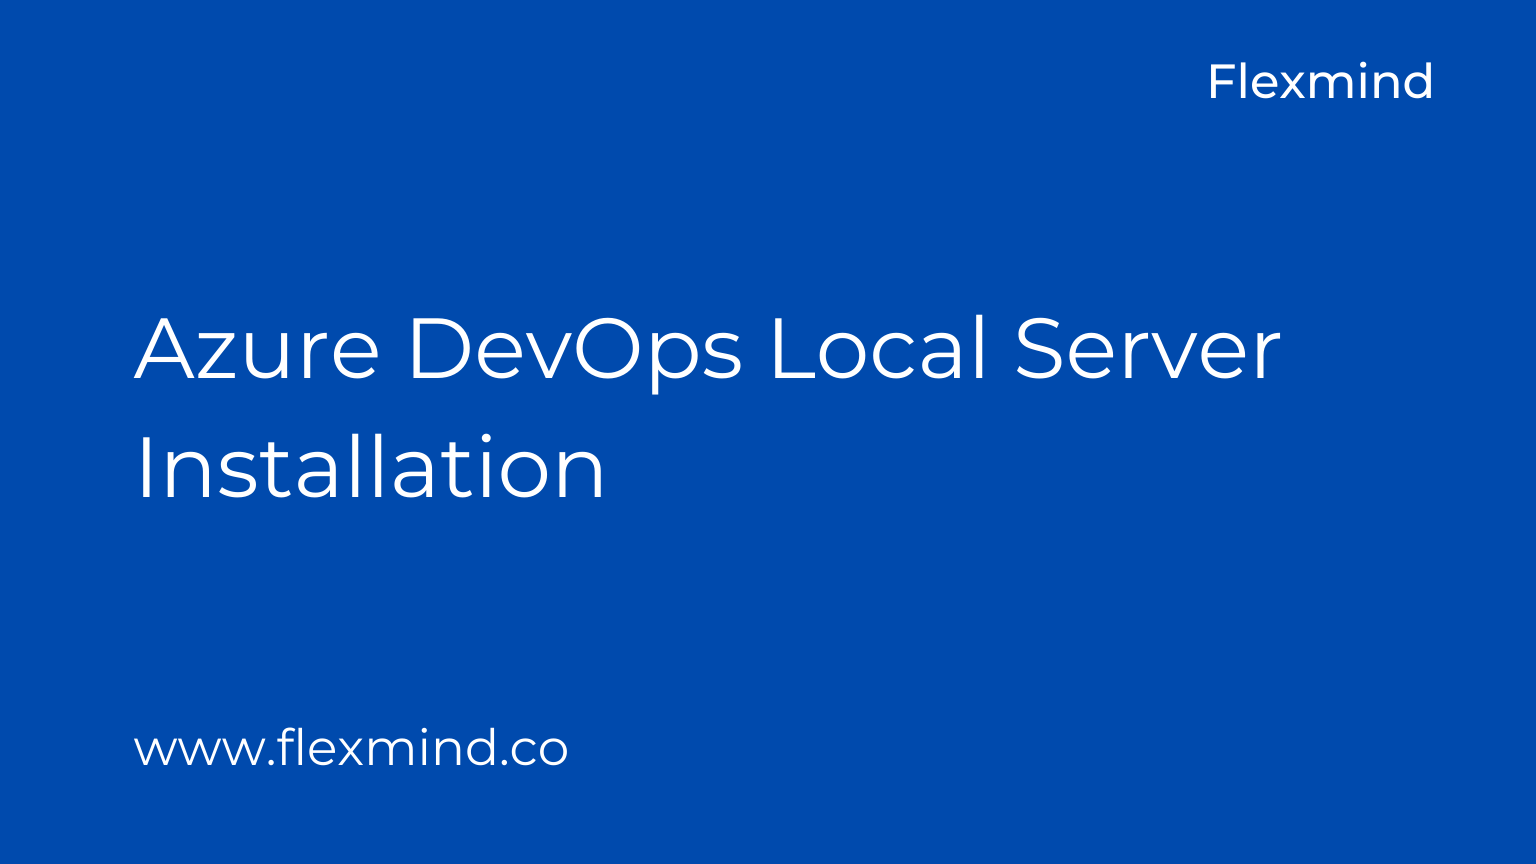 Azure DevOps Local Server